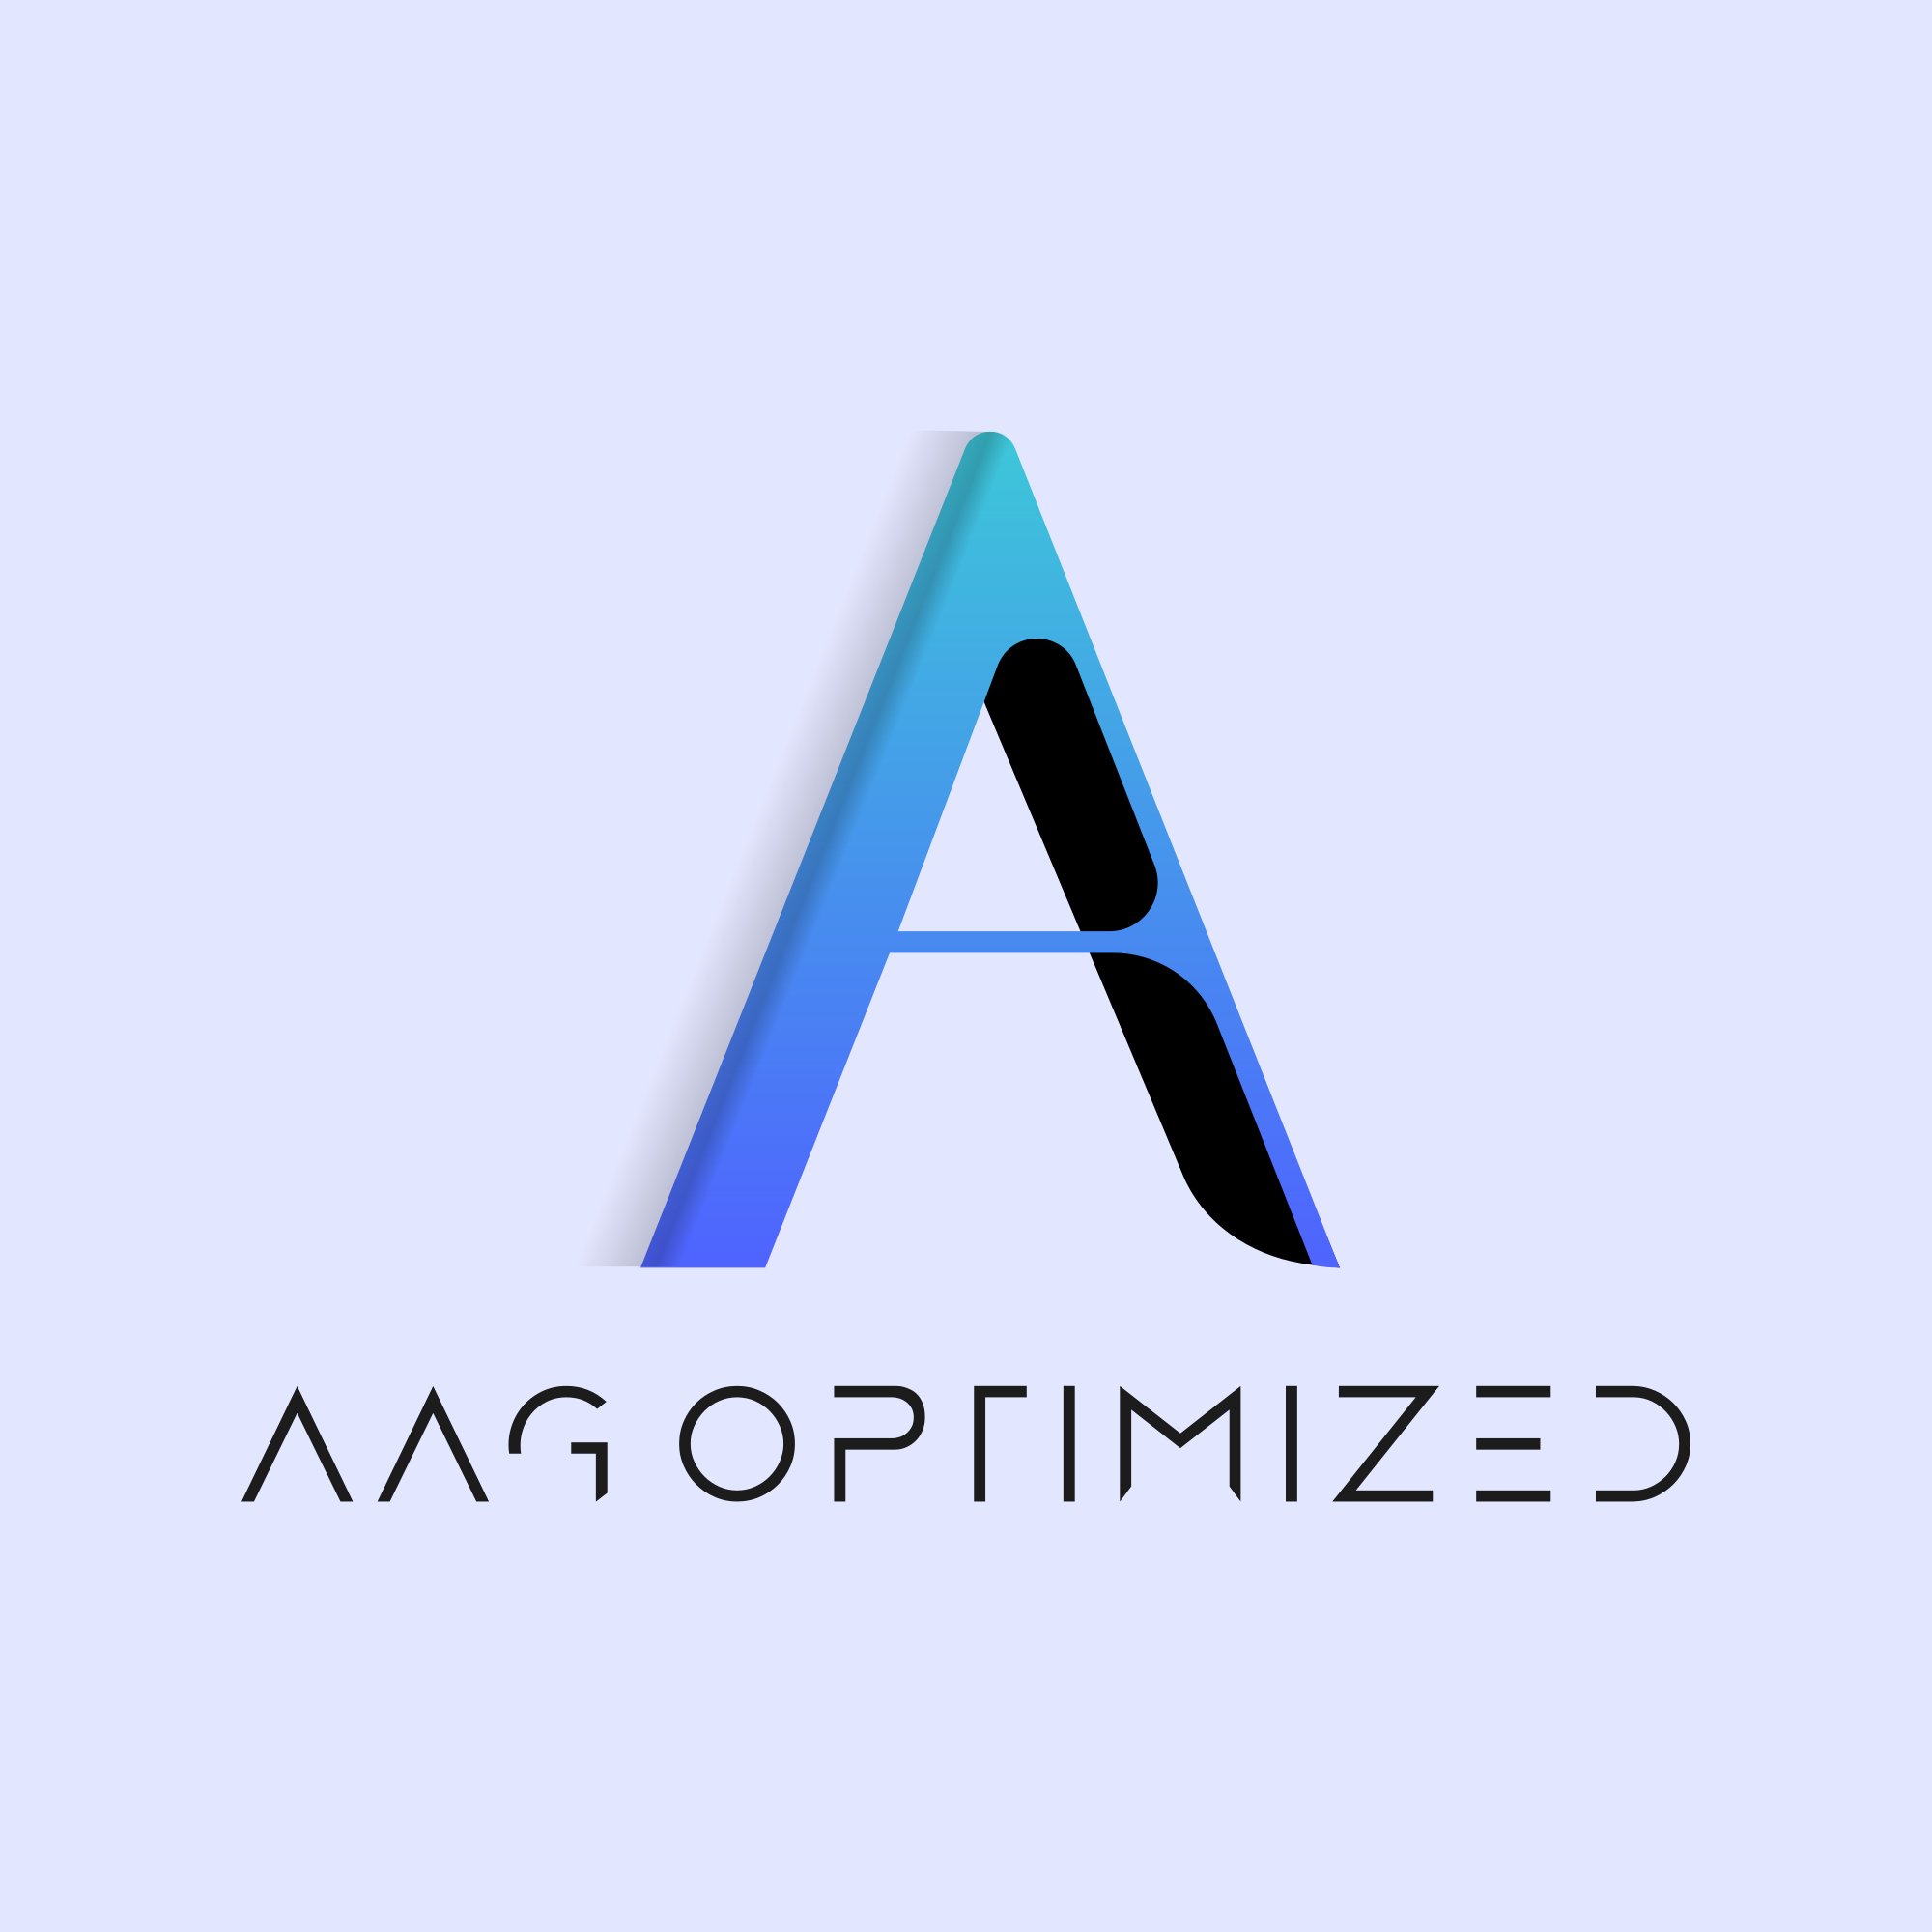 AAG Optimized